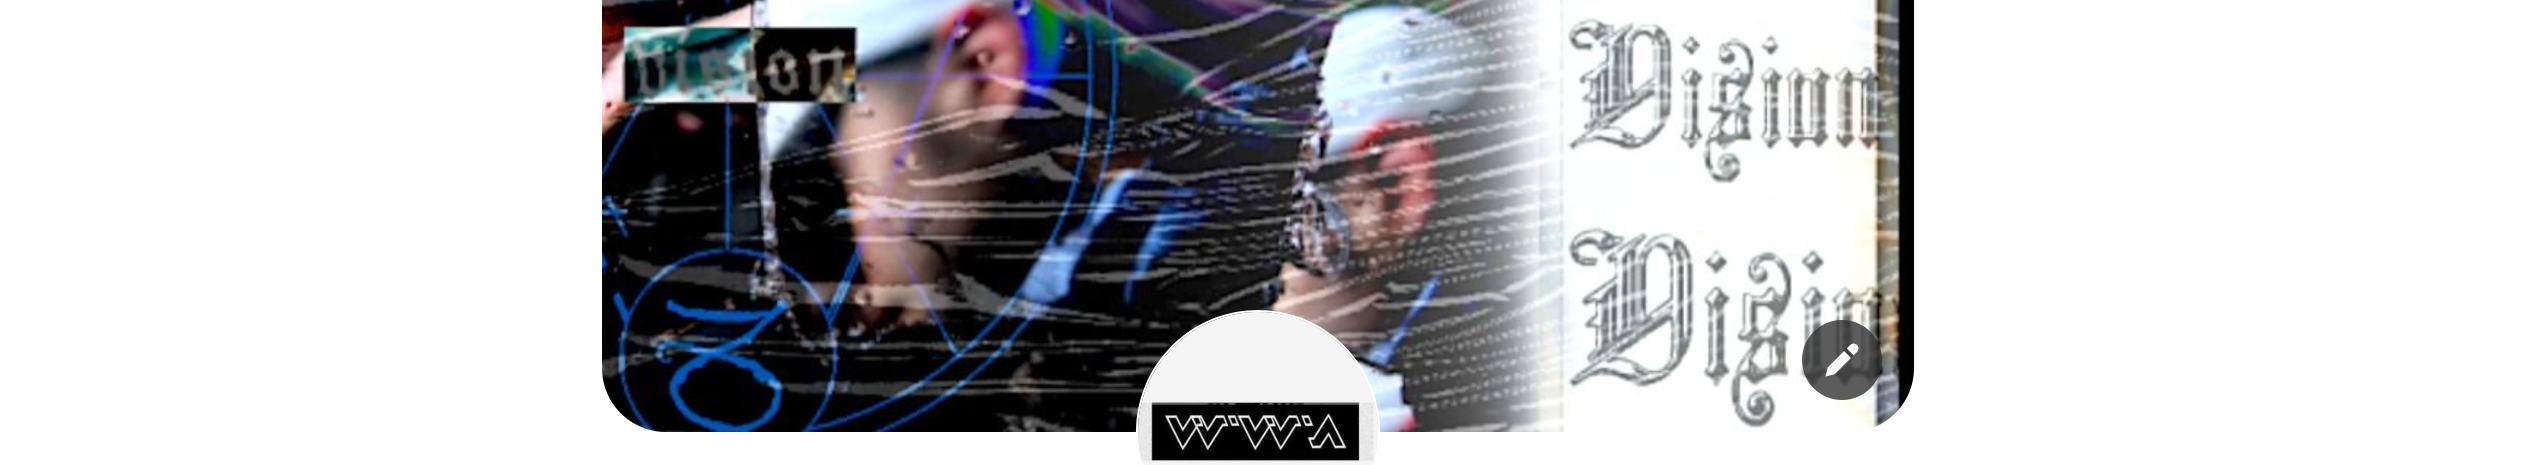 WWA whitewolfart's profile banner